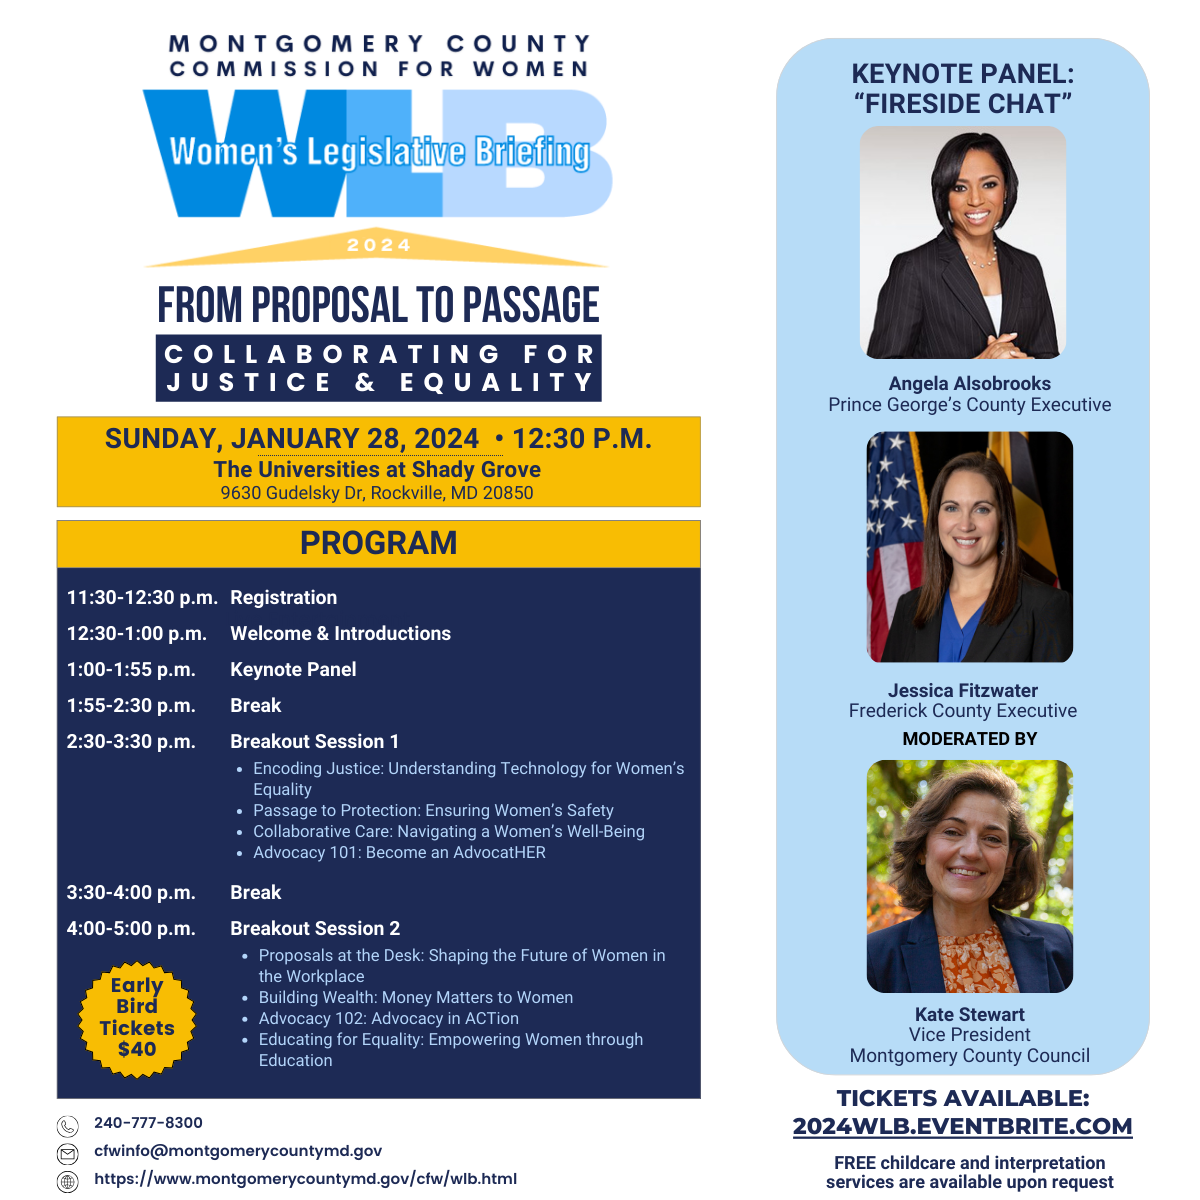  Women's Legislative Briefing  - Sunday January 28, 2024 - Universities at Shadygrove Rockville MD